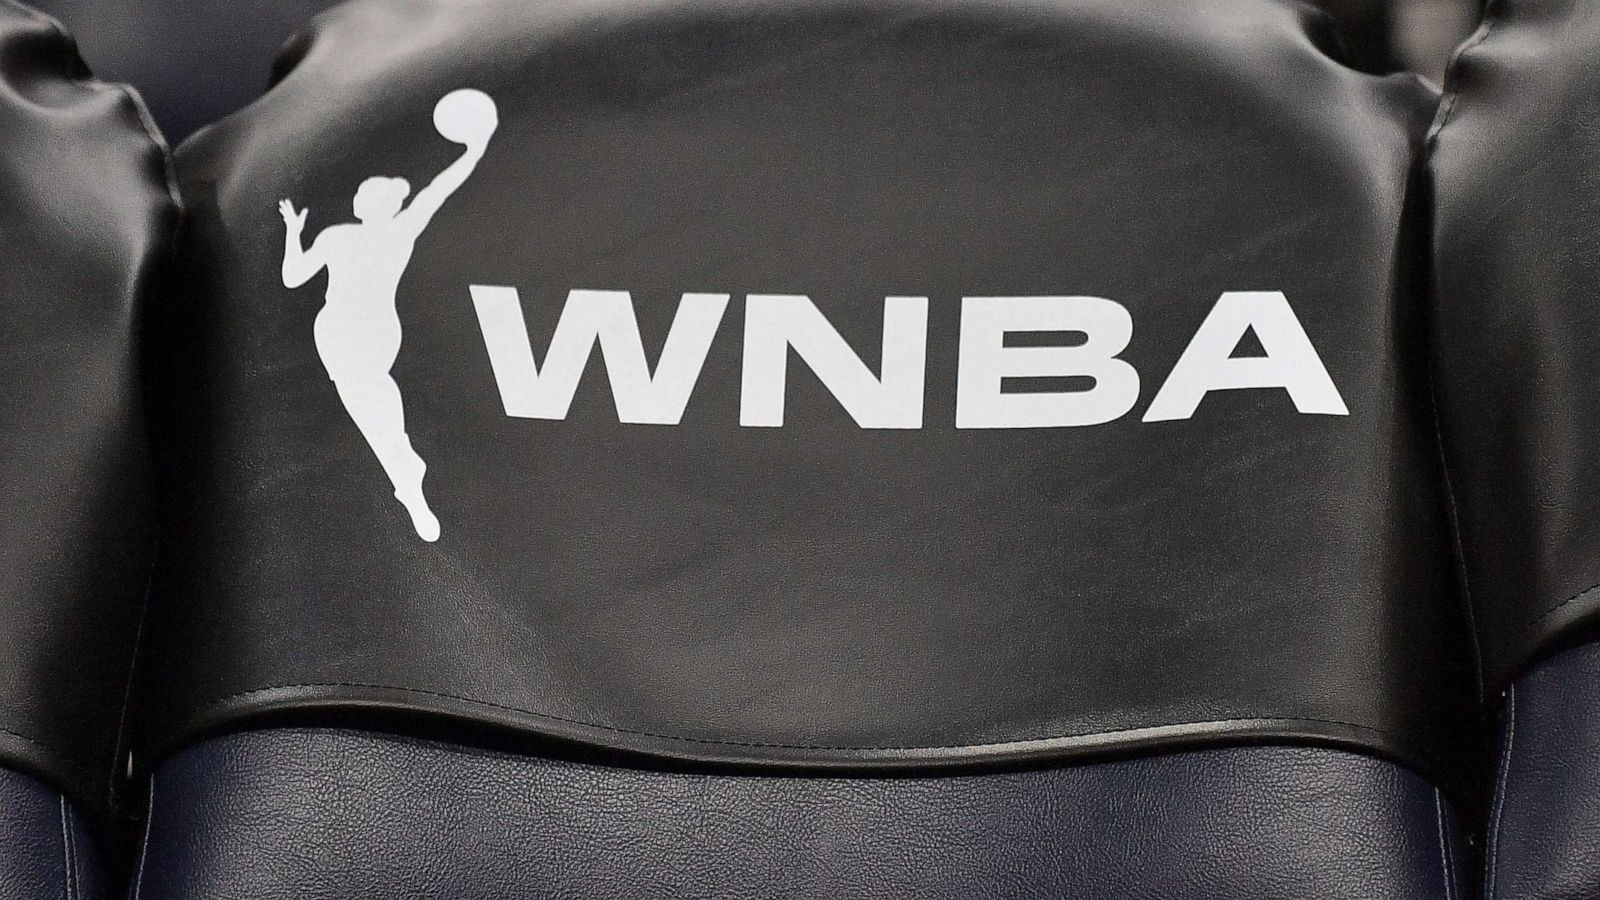 WNBA news: Late Breonna Taylor honored on 2020 WNBA jerseys